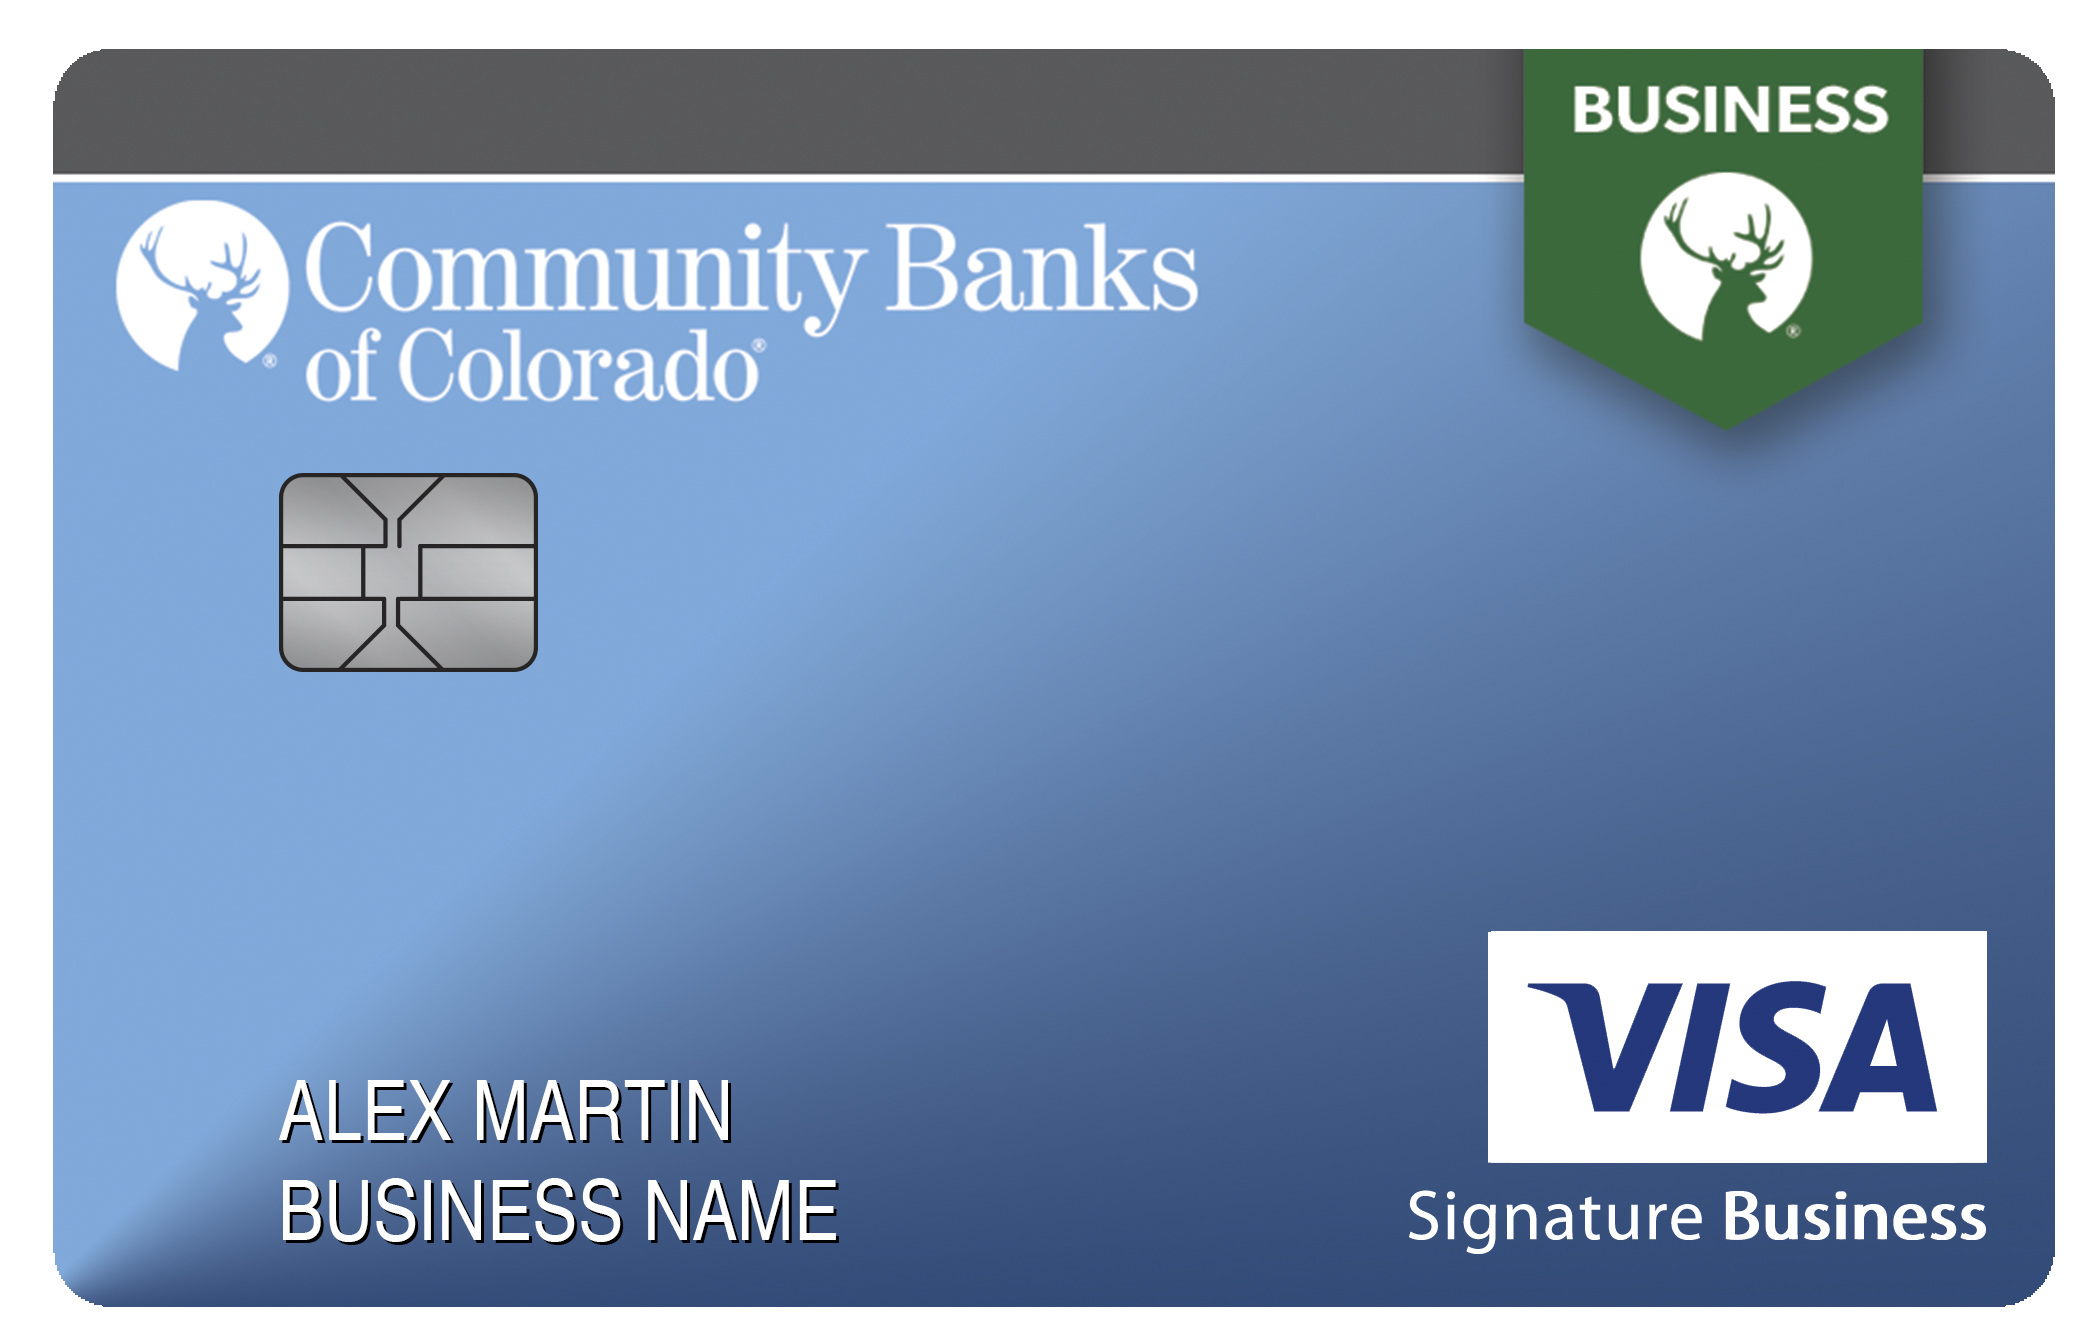 Community Banks of Colorado Smart Business Rewards Card